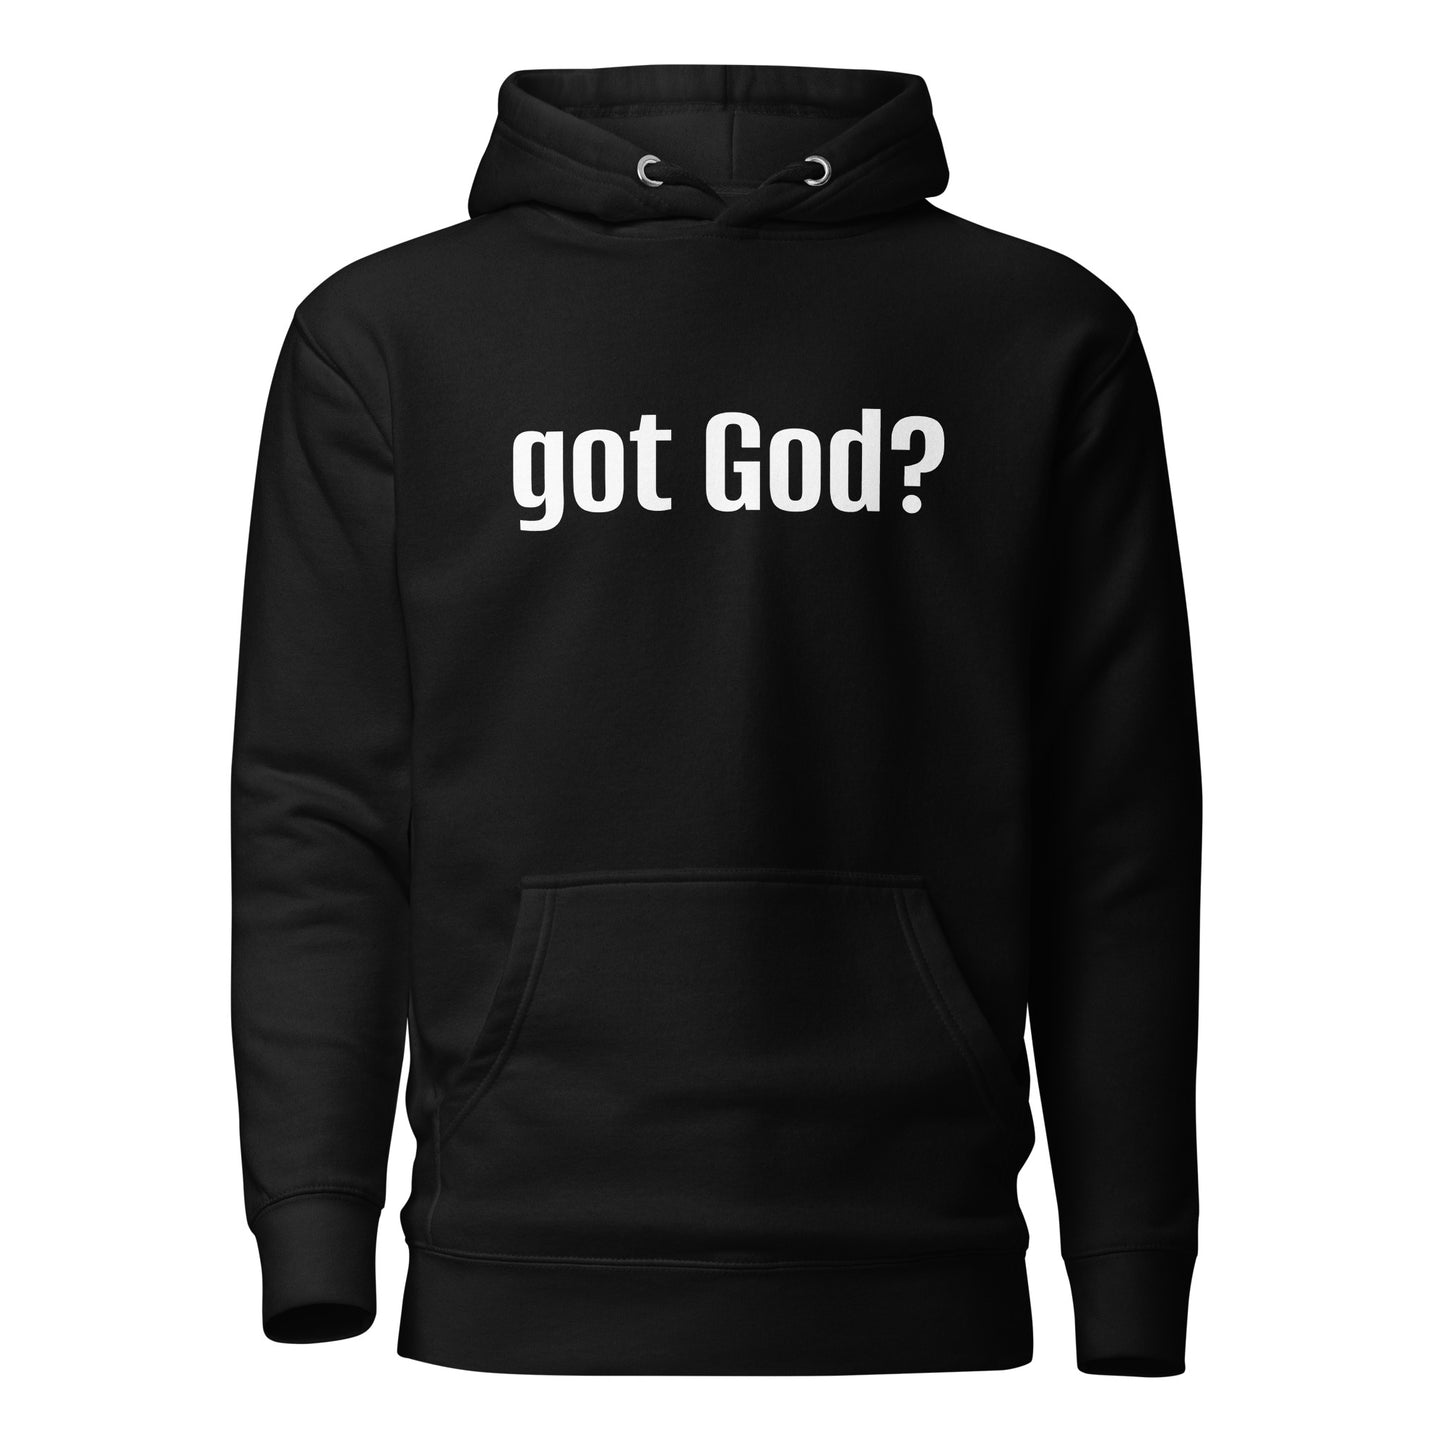 Got God? Unisex Hoodie